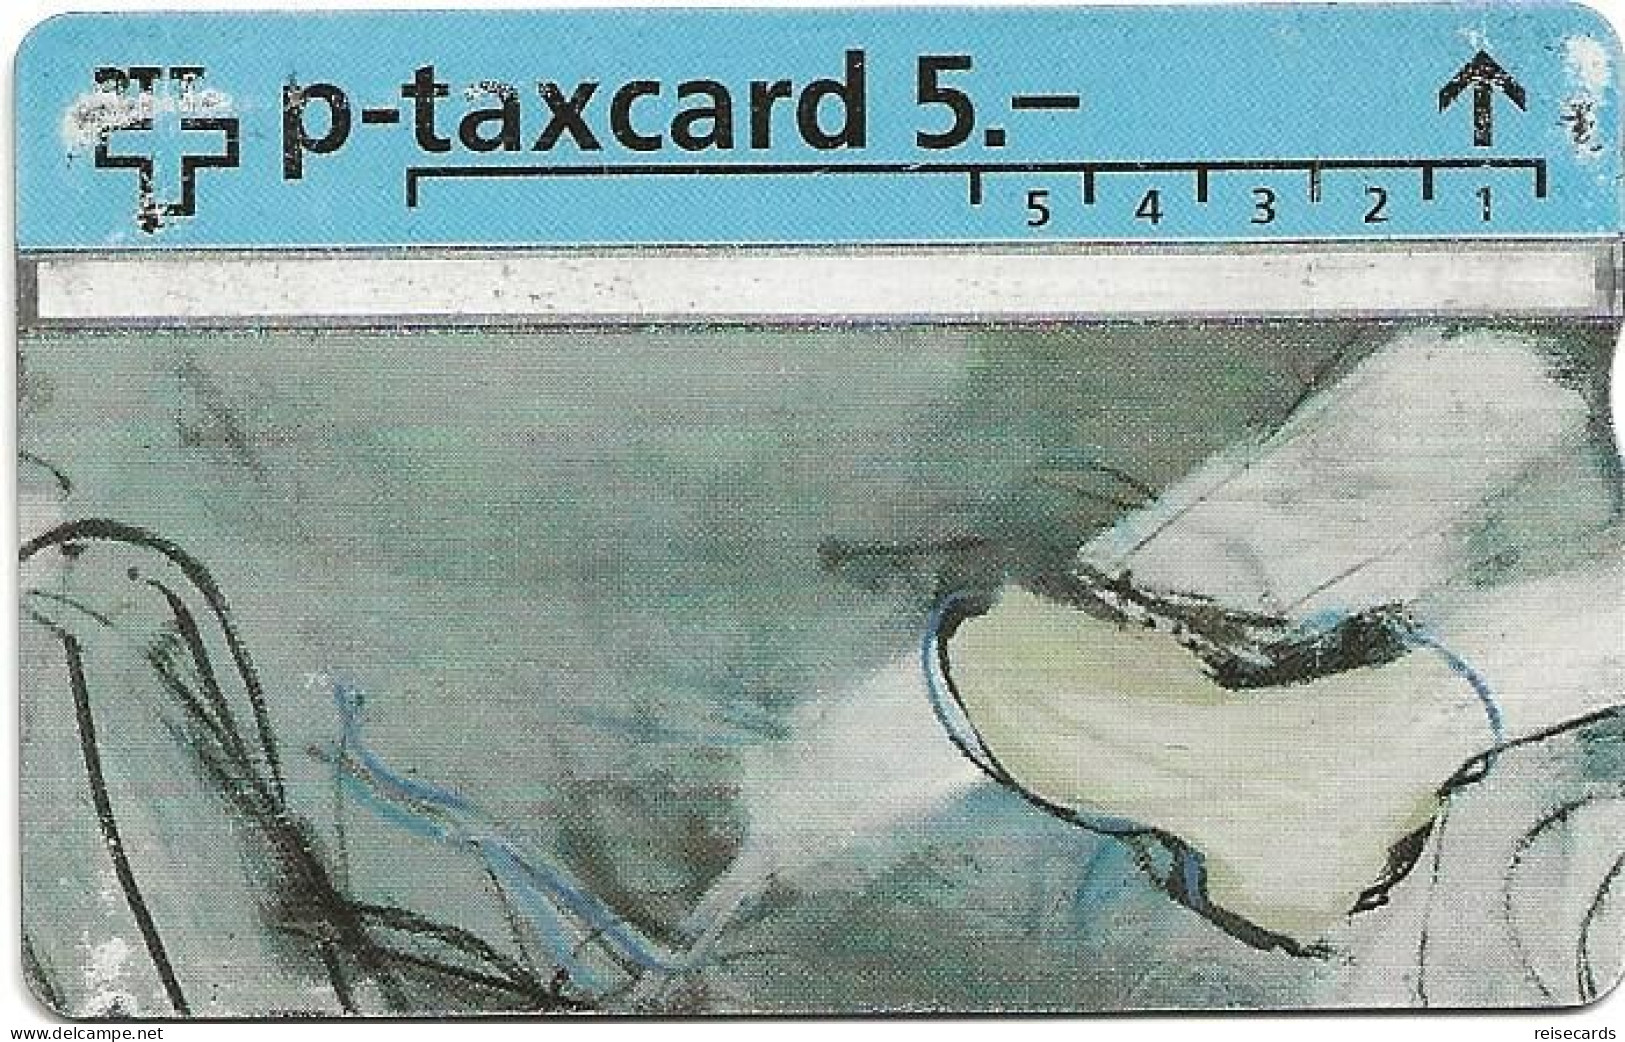 Switzerland: PTT K P 93/06 326L SmithKline Beecham - Art-Tax-Card Mario Comensoli - Suisse